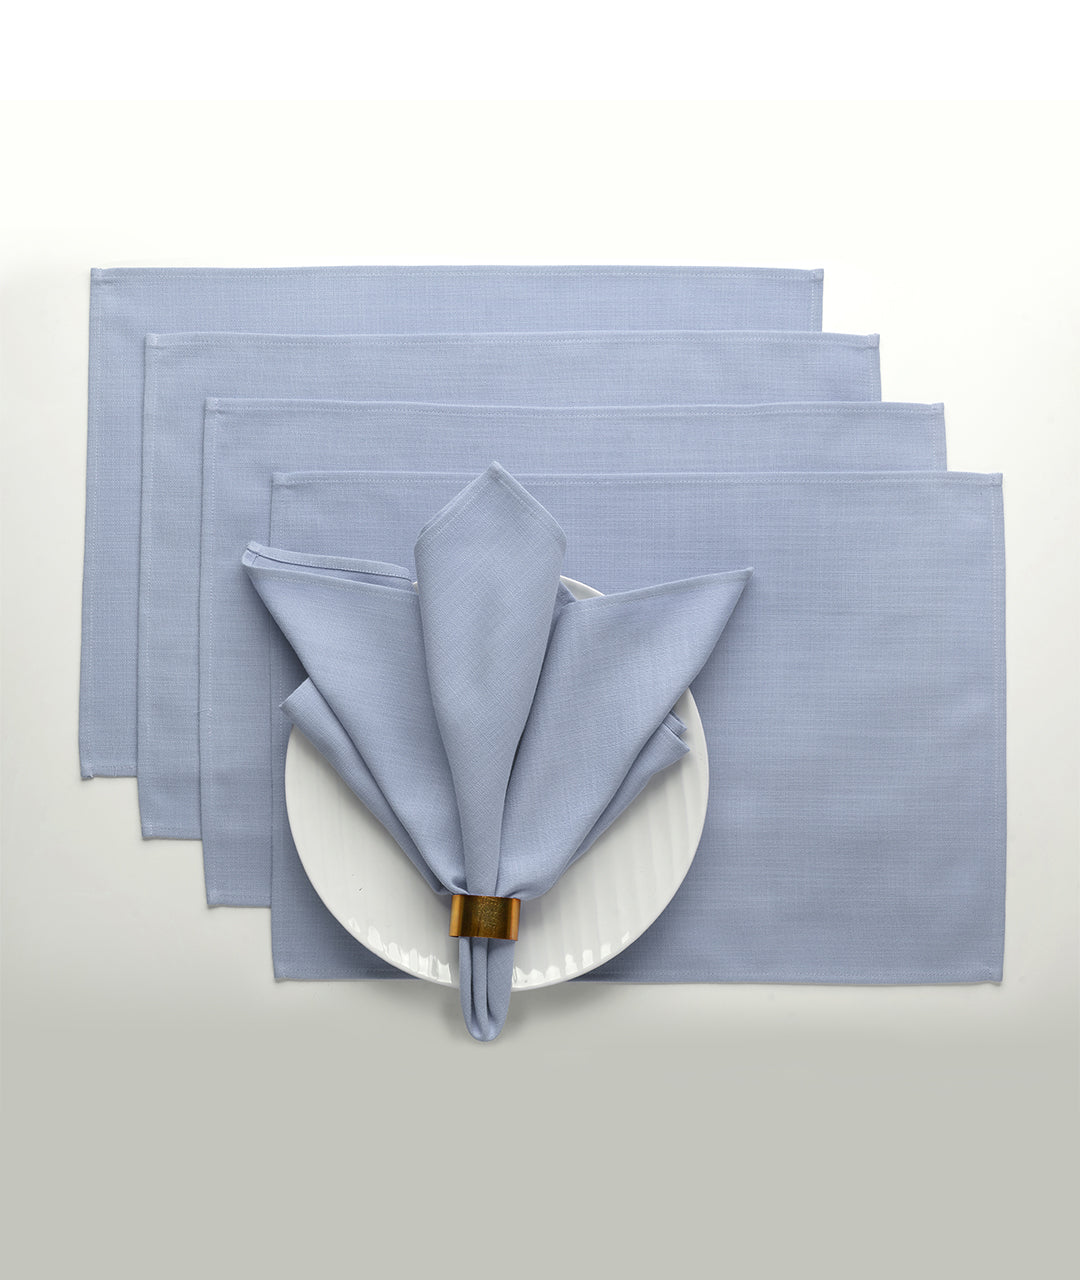 Powder Blue Linen Textured Placemats 13 x 18 Inch Set of 4 - Plain